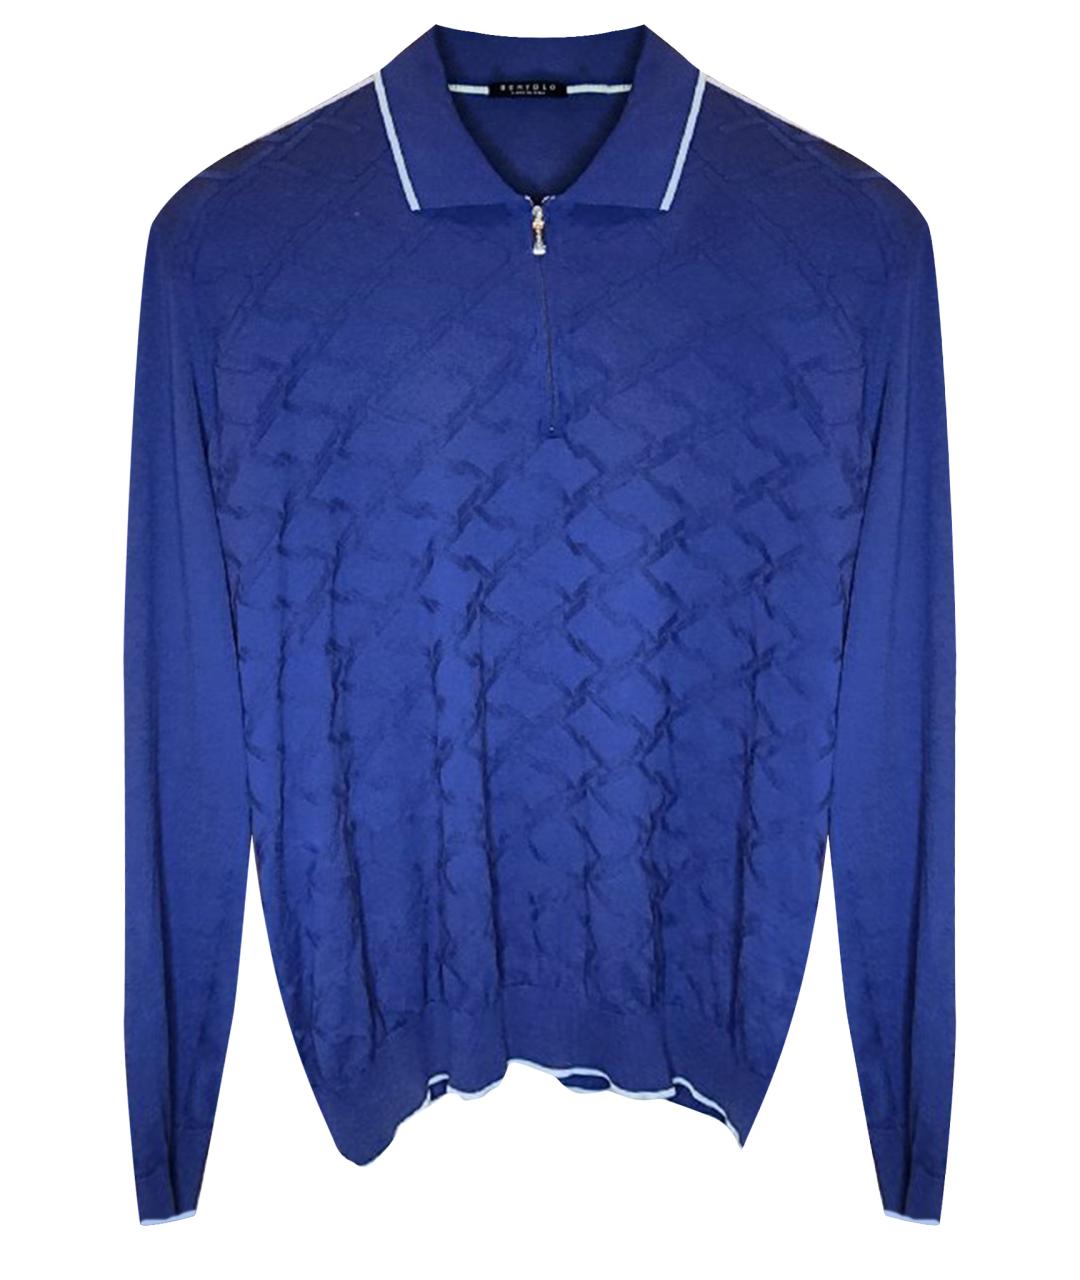 BERTOLO LUXURY MENSWEAR Темно-синий хлопковый джемпер / свитер, фото 1